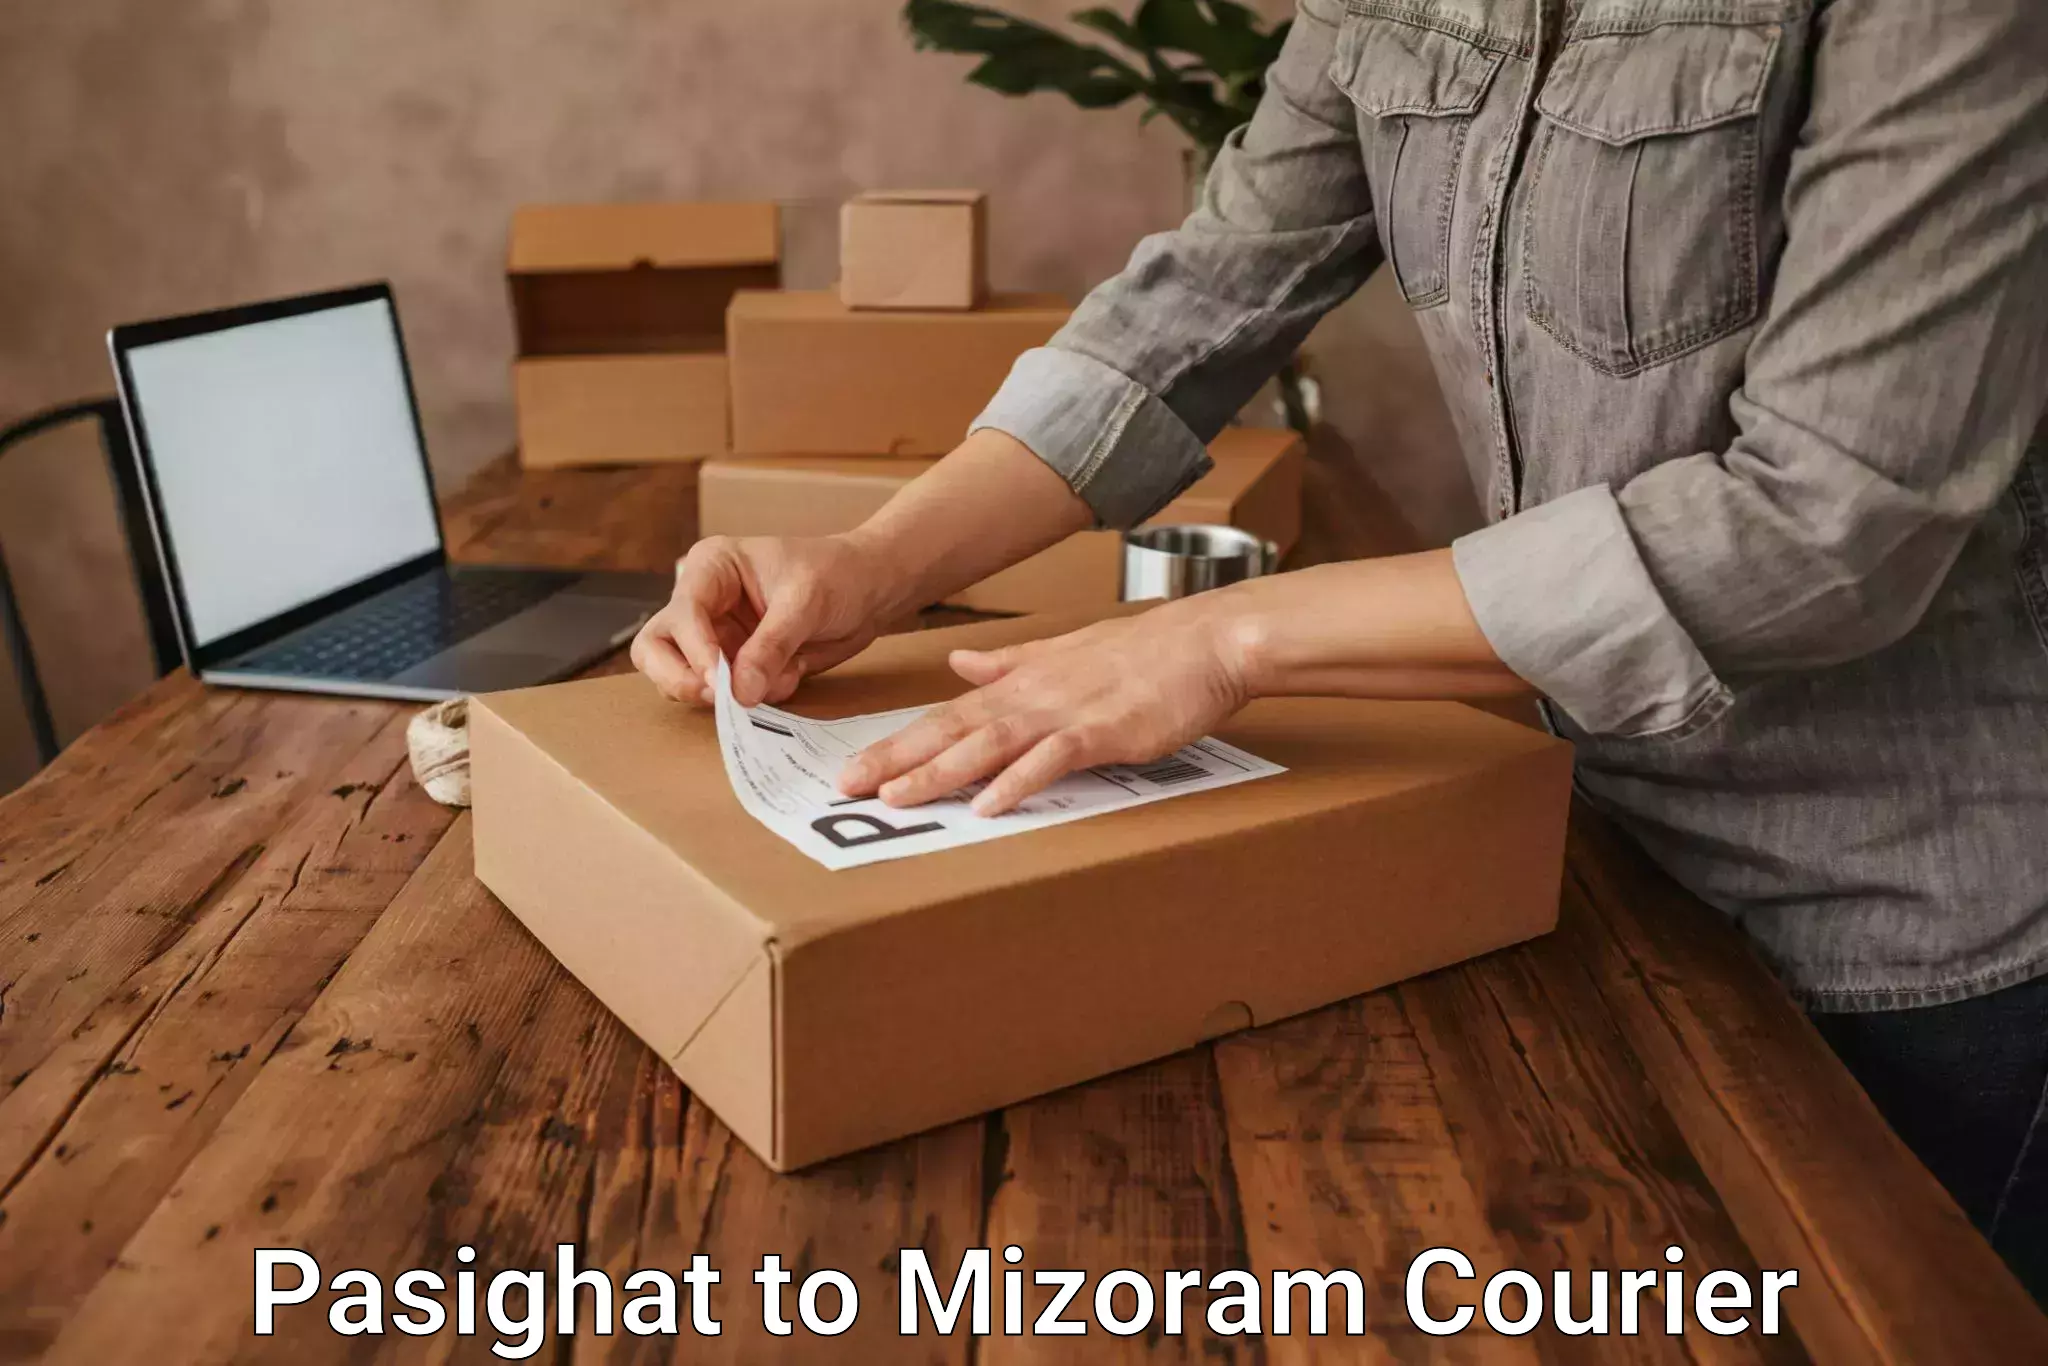 Courier service partnerships Pasighat to Mizoram